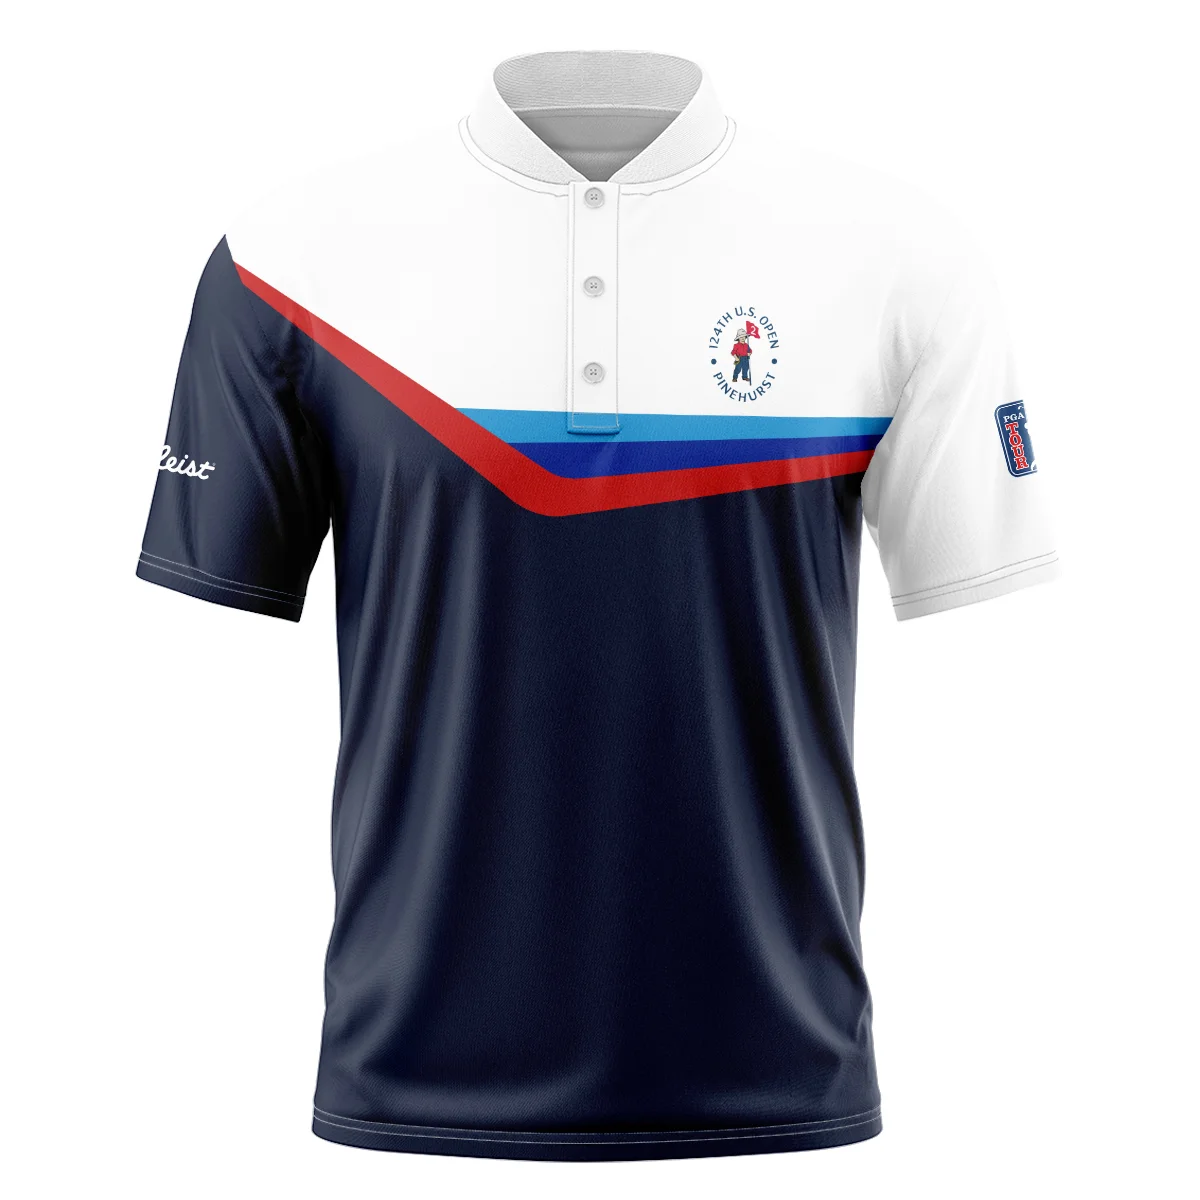 124th U.S. Open Pinehurst Golf Blue Red Line White Pattern Titleist Zipper Polo Shirt Style Classic Zipper Polo Shirt For Men